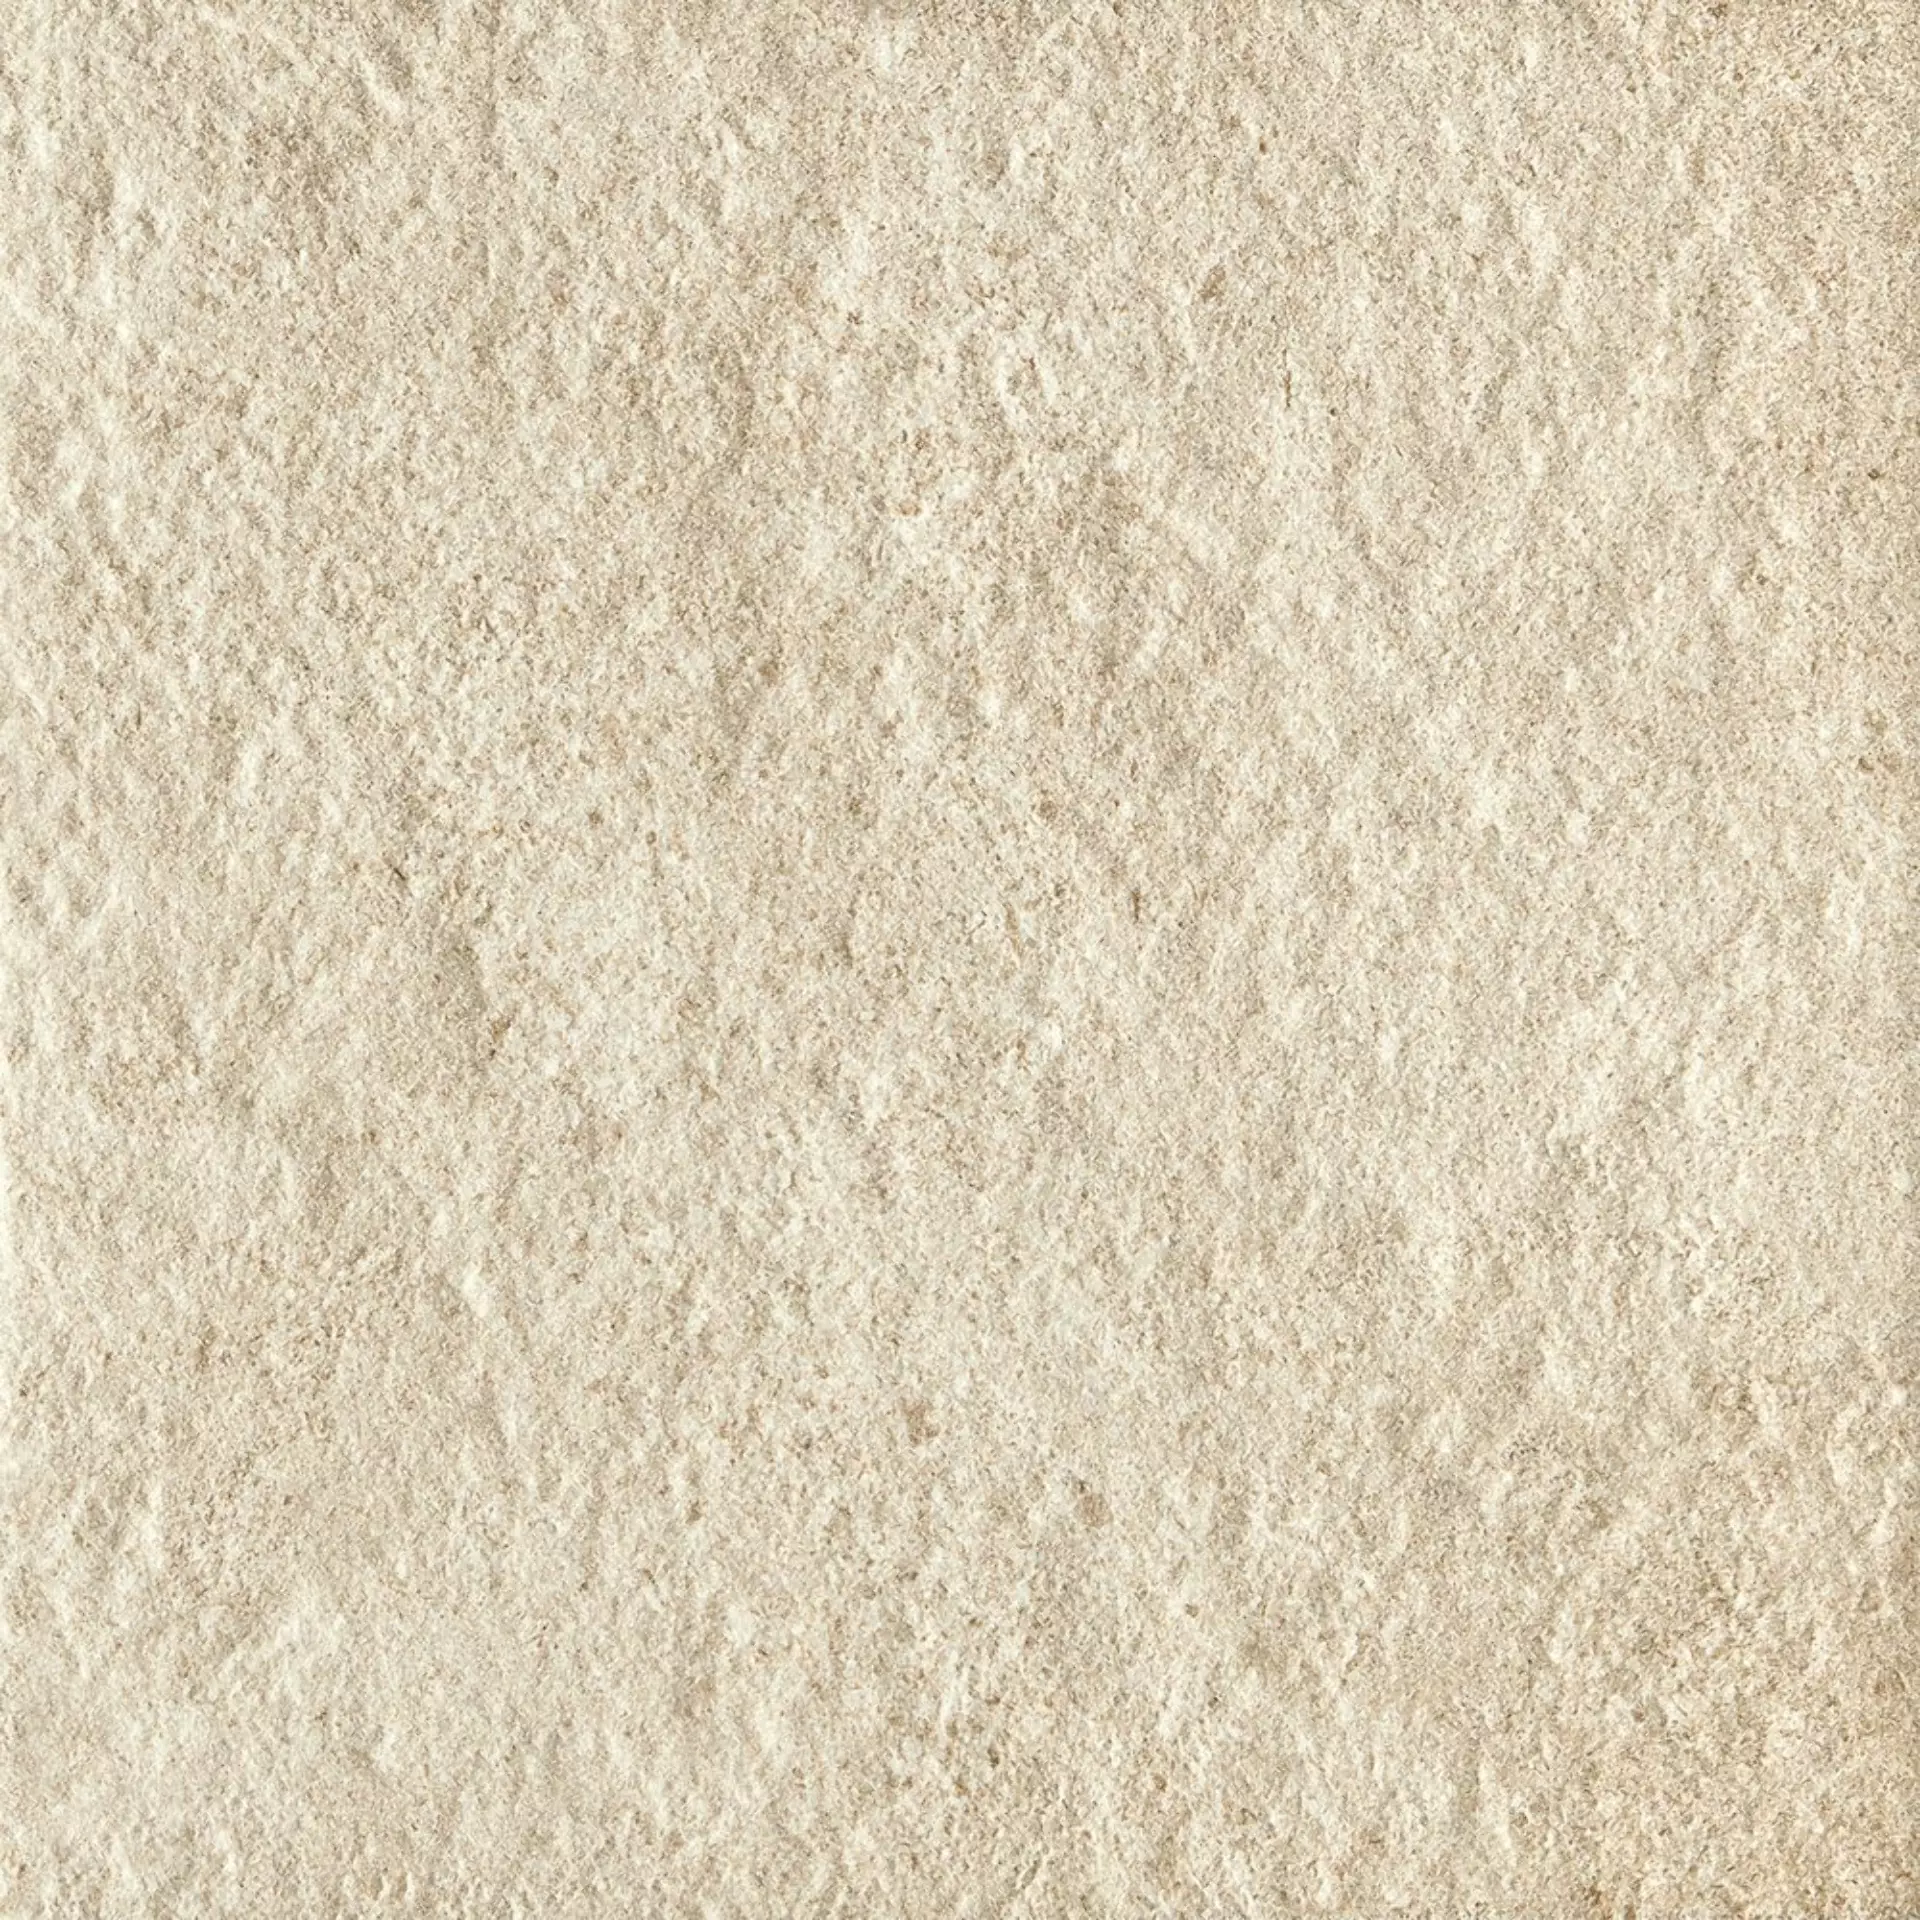 Bodenfliese,Wandfliese Marazzi Stonework White Strutturato White MLHU strukturiert 33,3x33,3cm 8mm